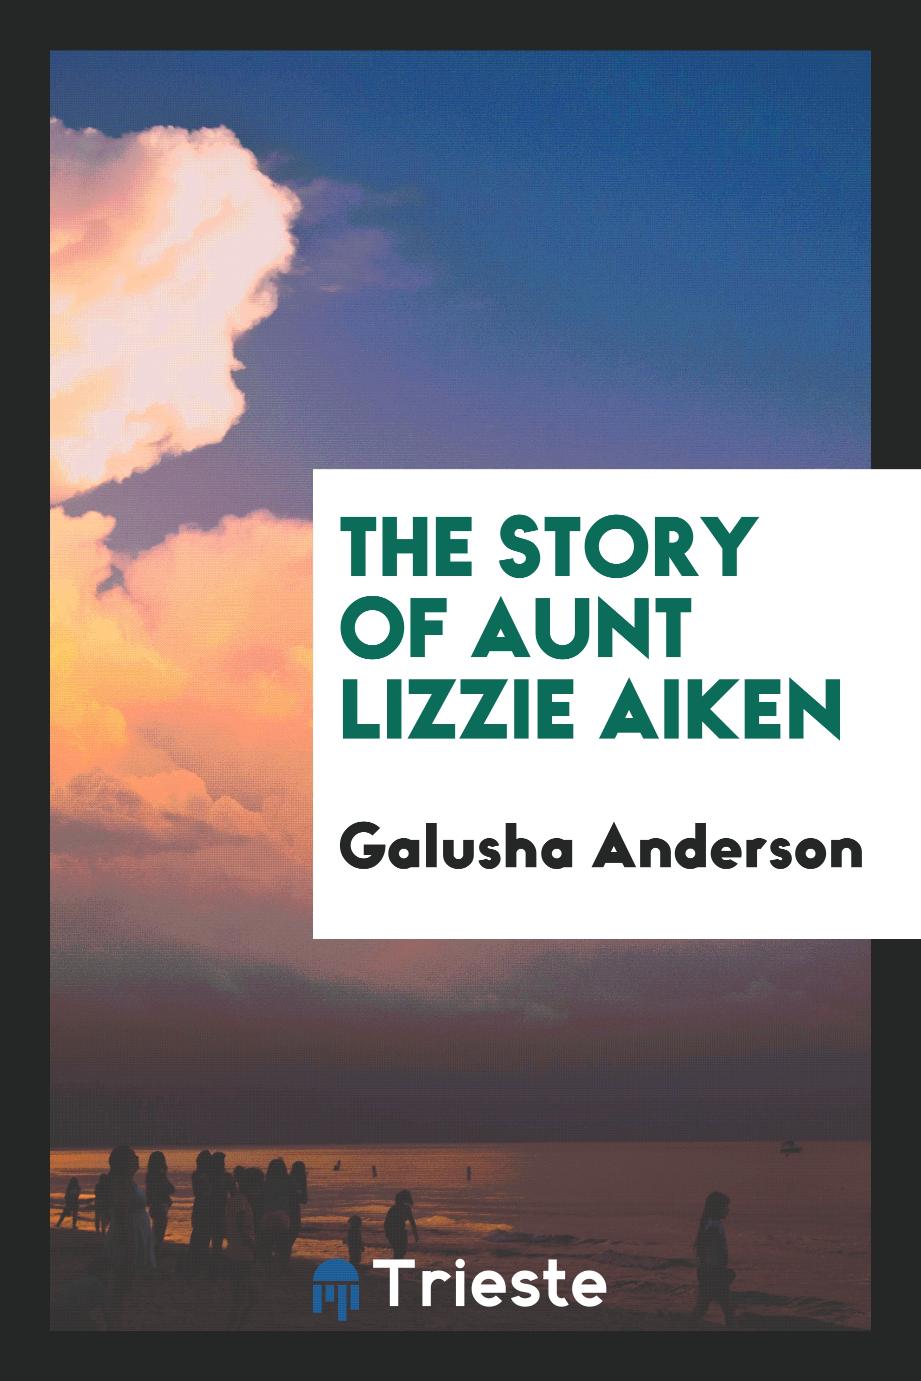 The story of Aunt Lizzie Aiken